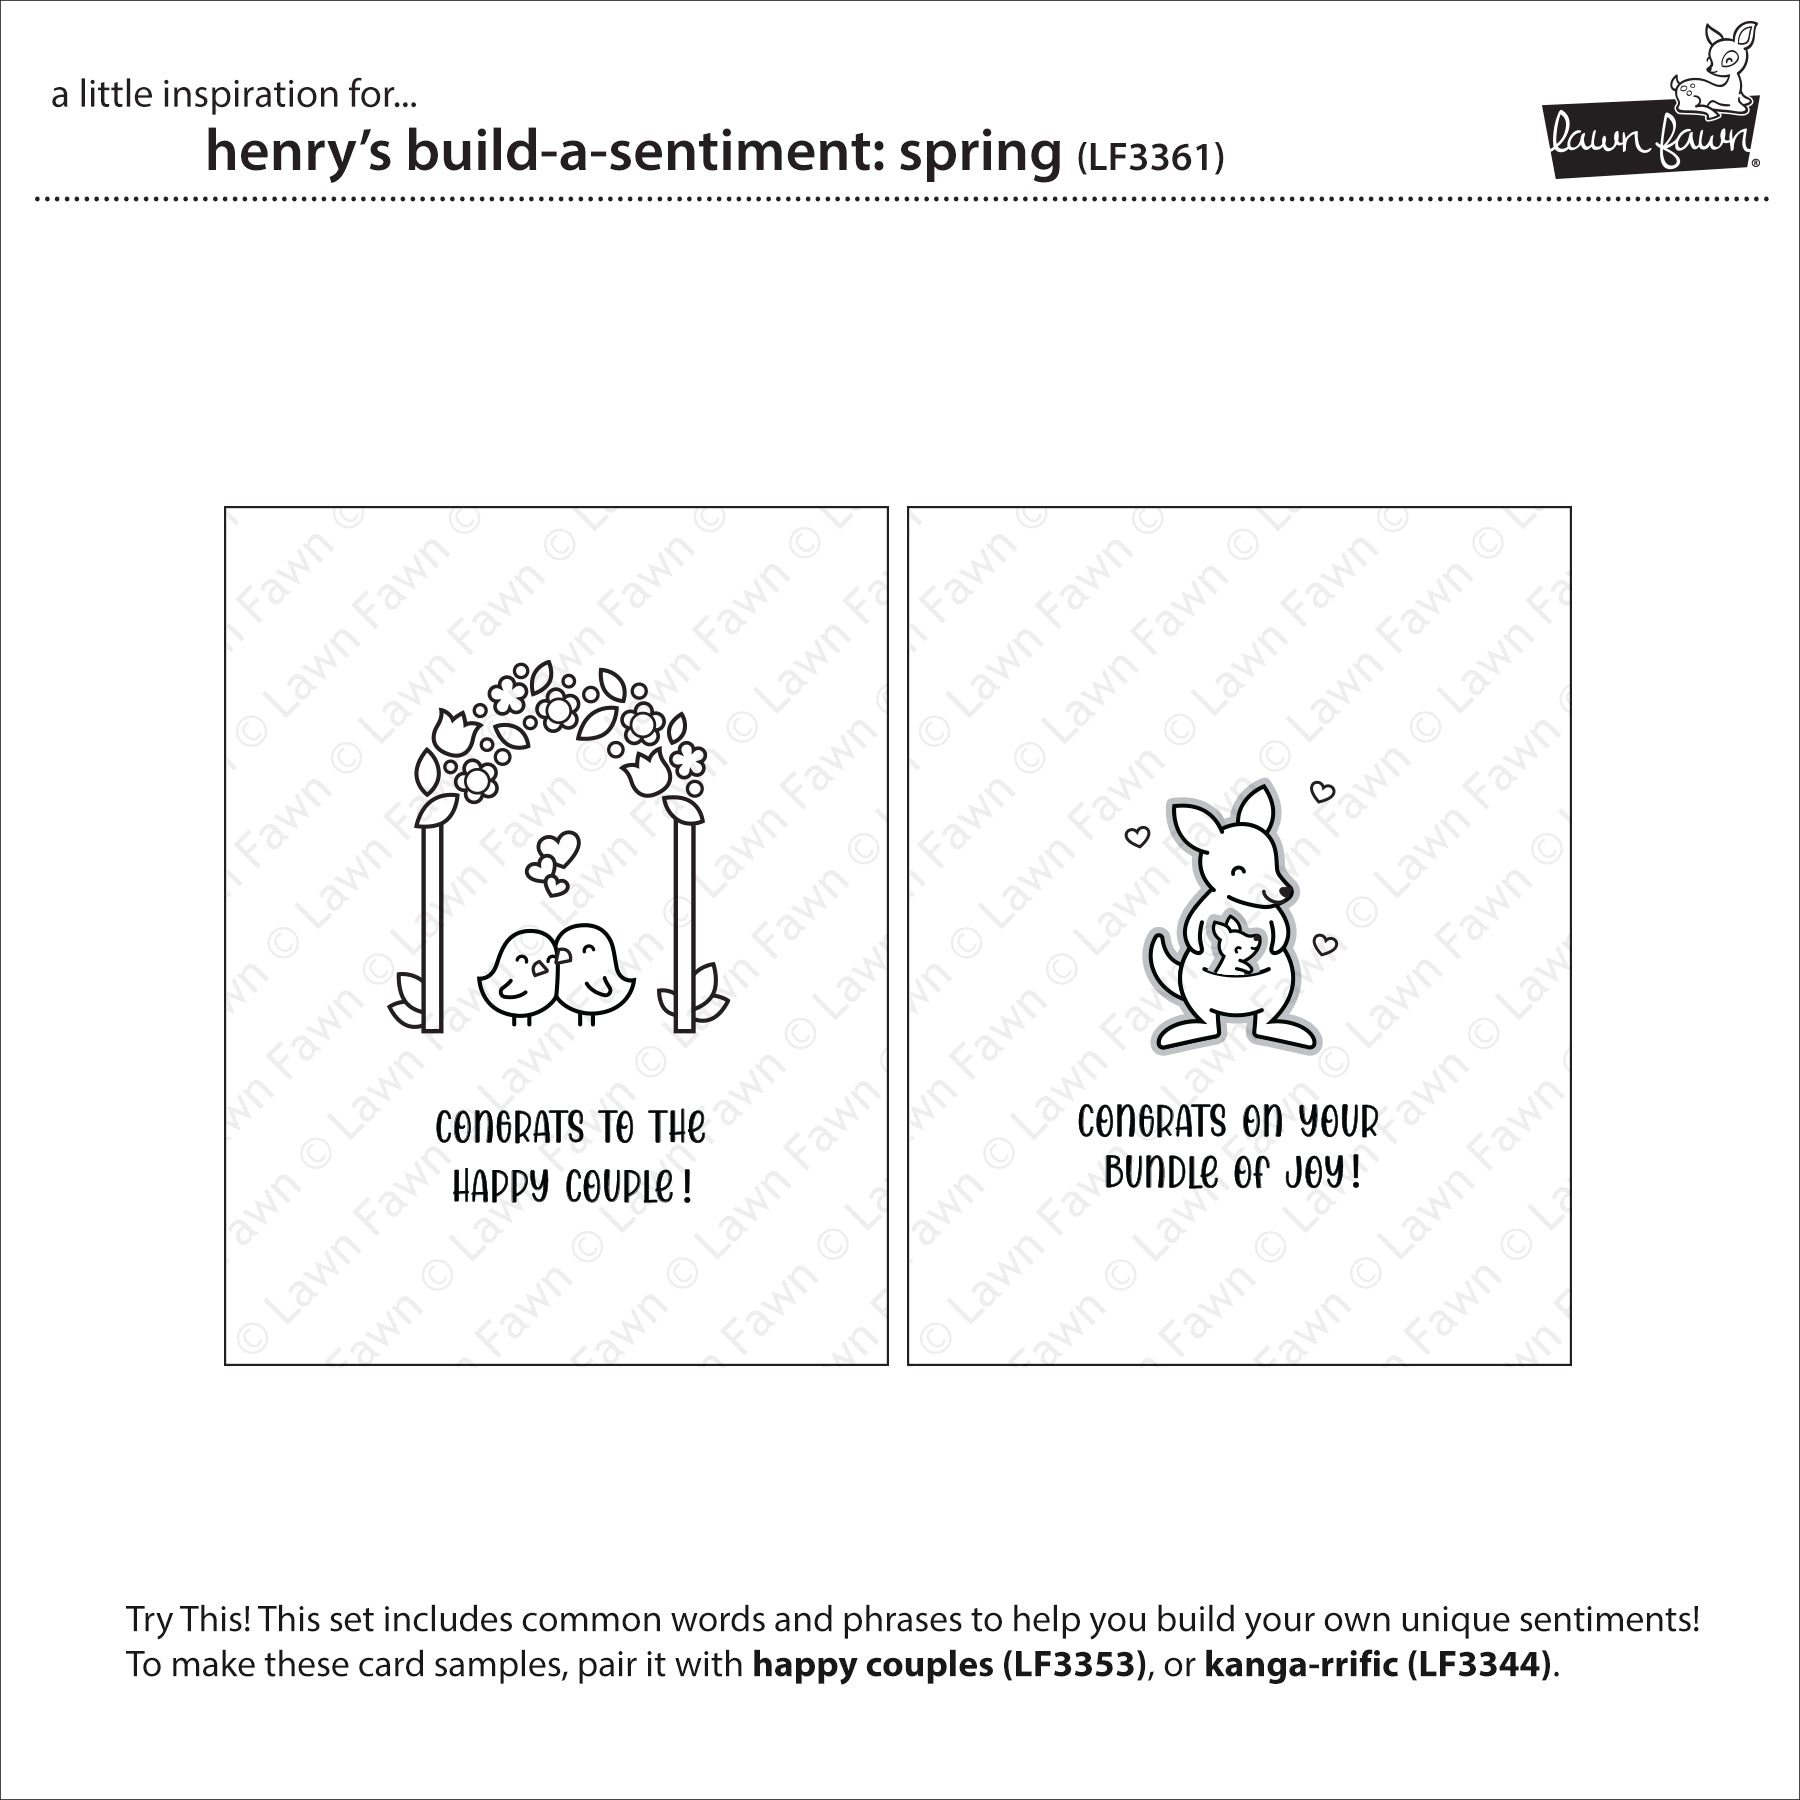 henry’s build-a-sentiment: spring